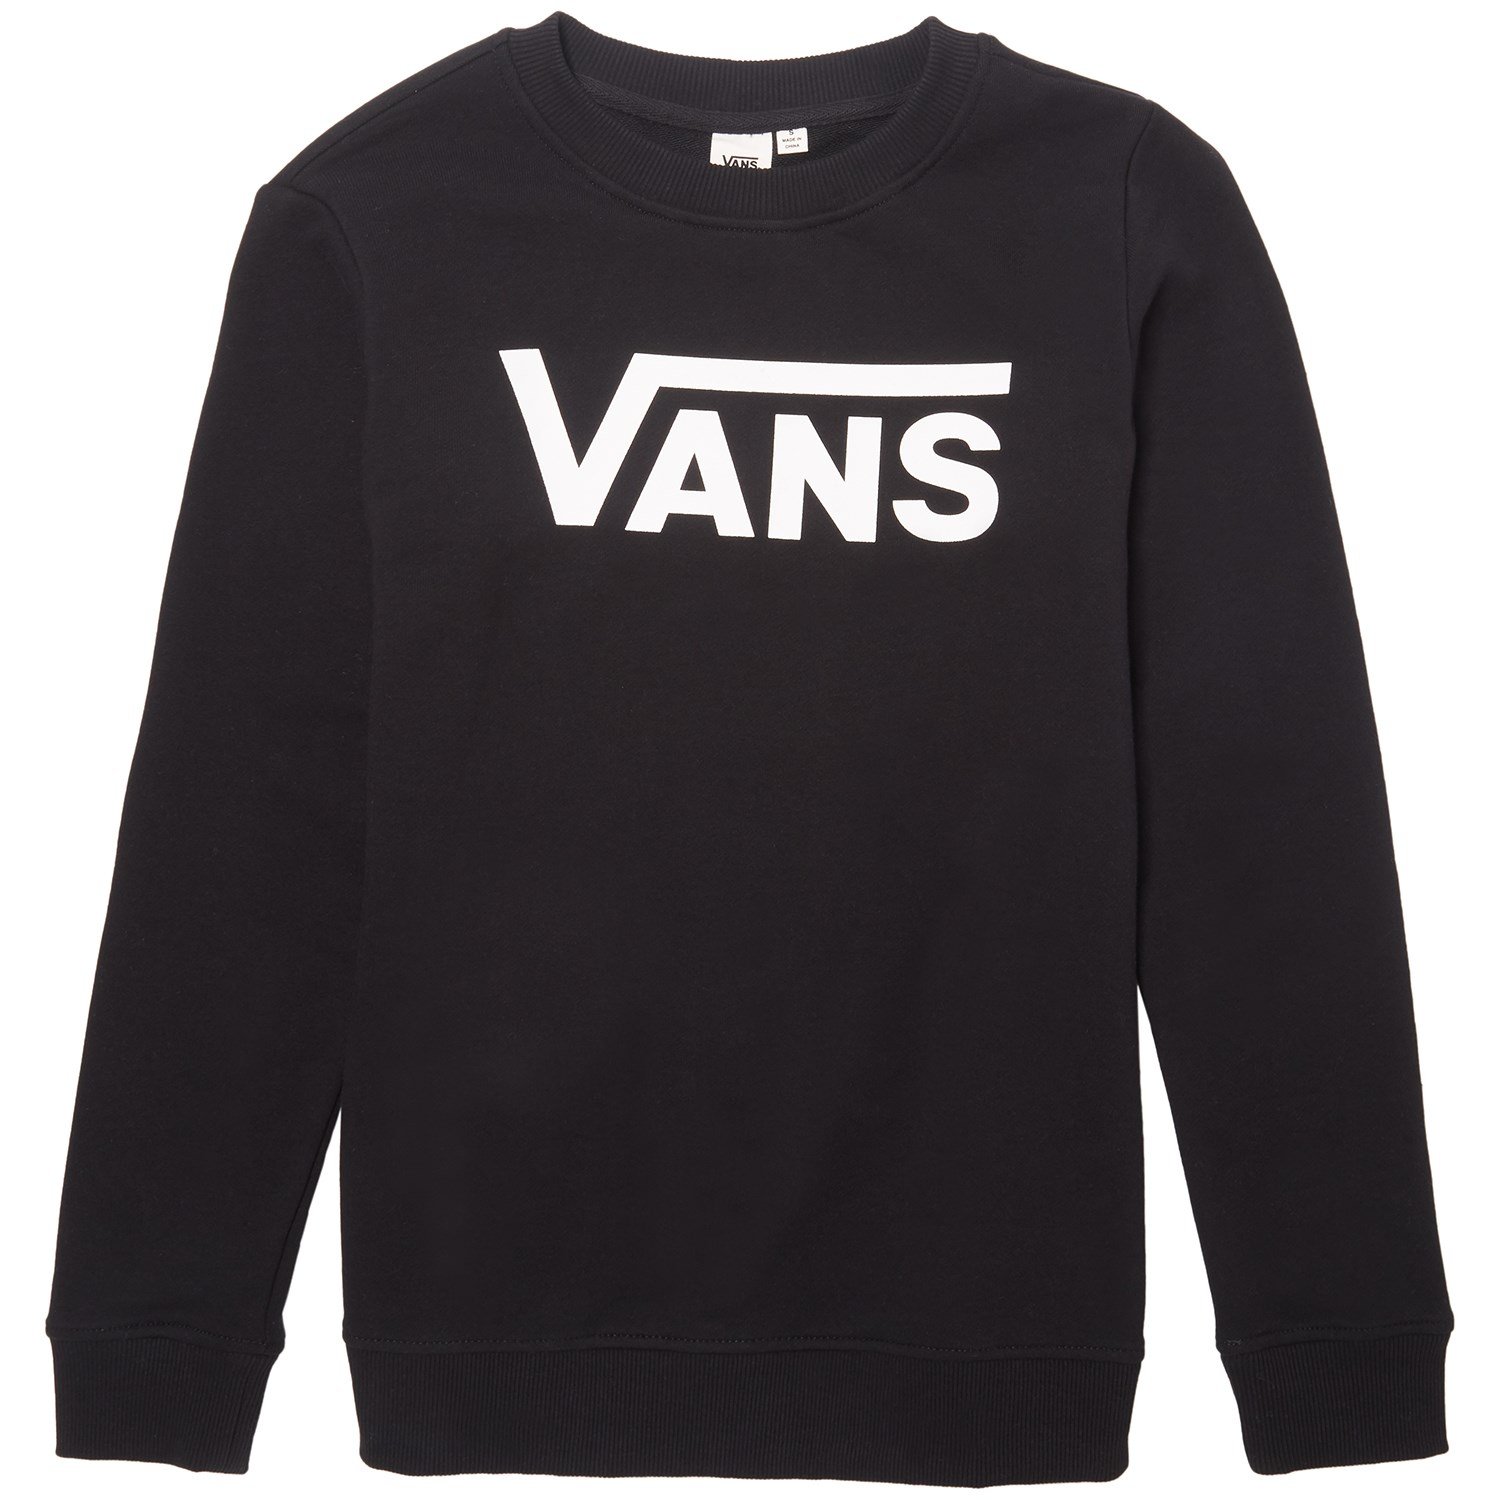 vans black sweatshirt womens